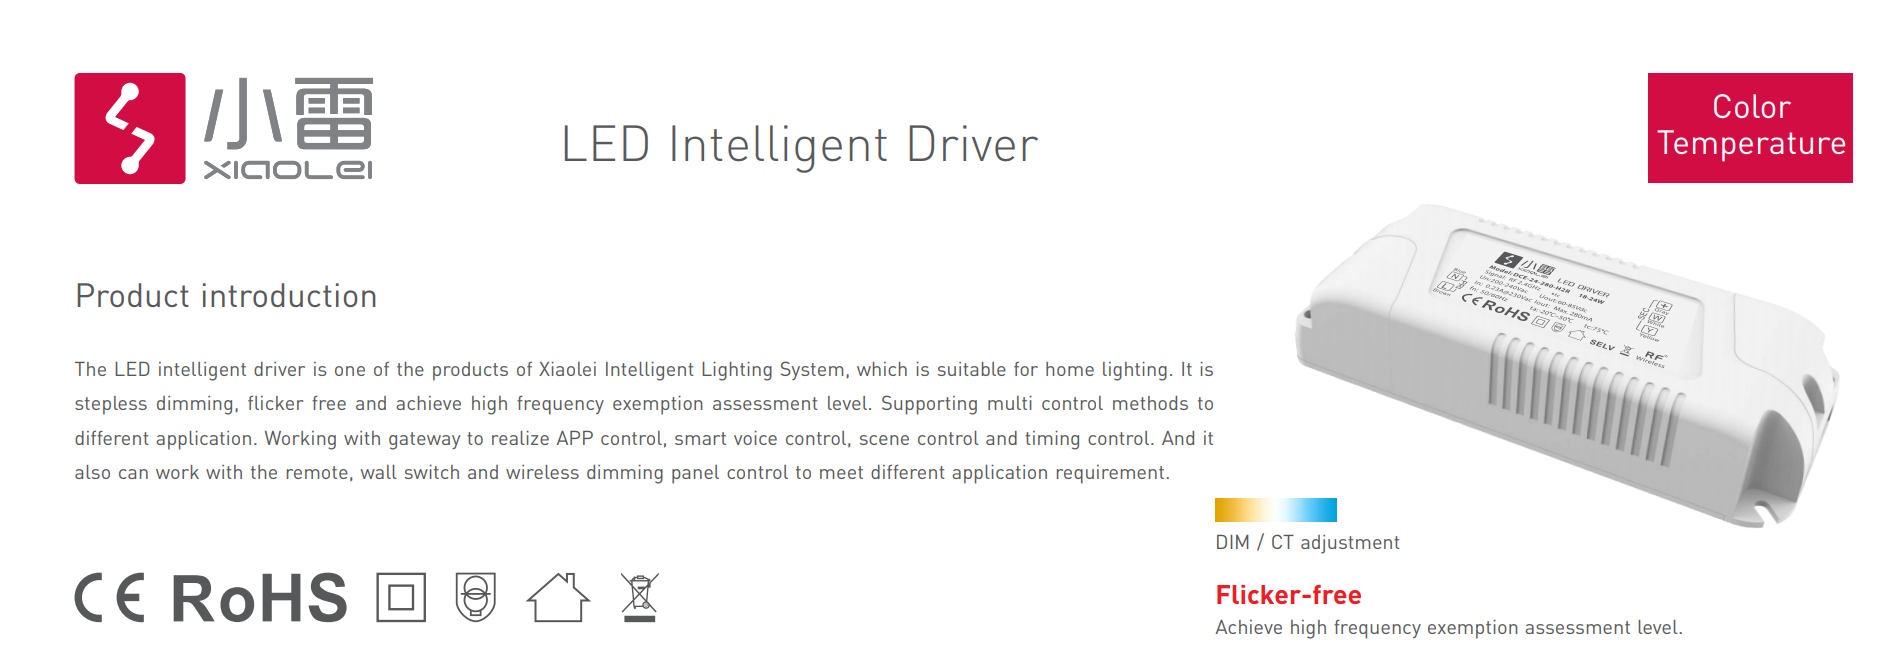 Ltech_DCE_24_280_H2R_LED_Intelligent_Driver_1